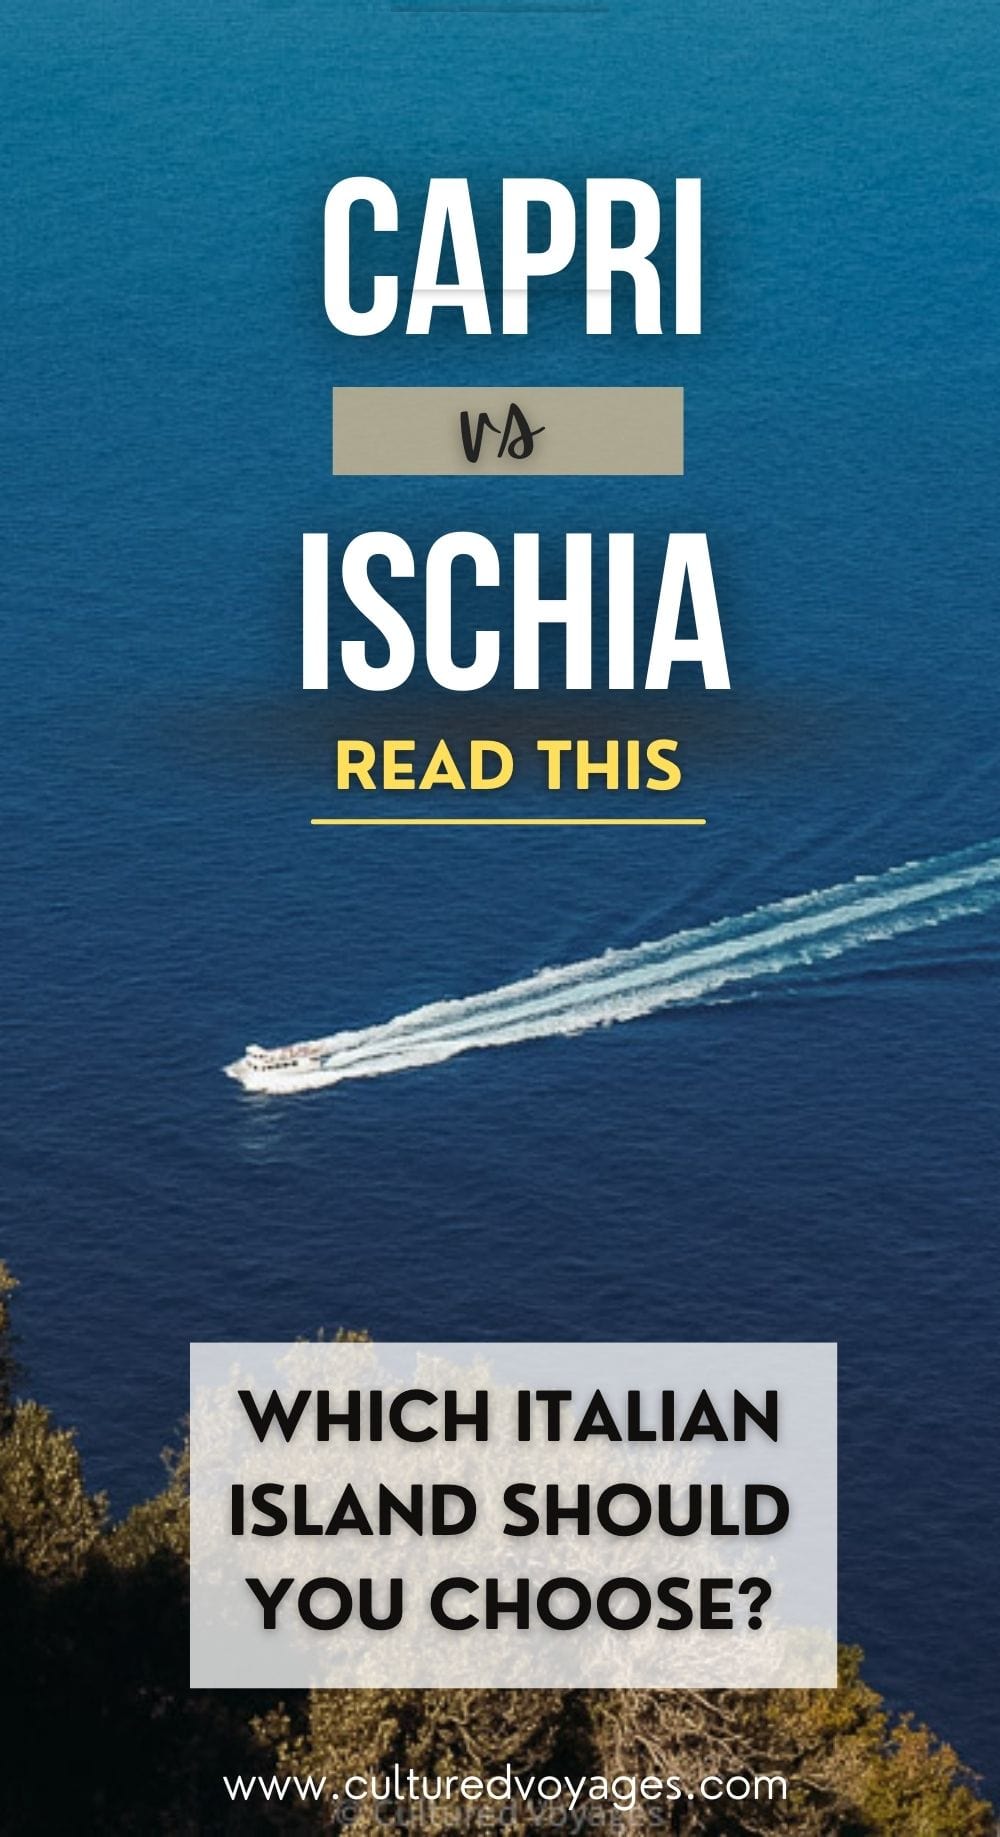 capri vs ischia pin cover, showing image of boat sailing across sea at Ischia